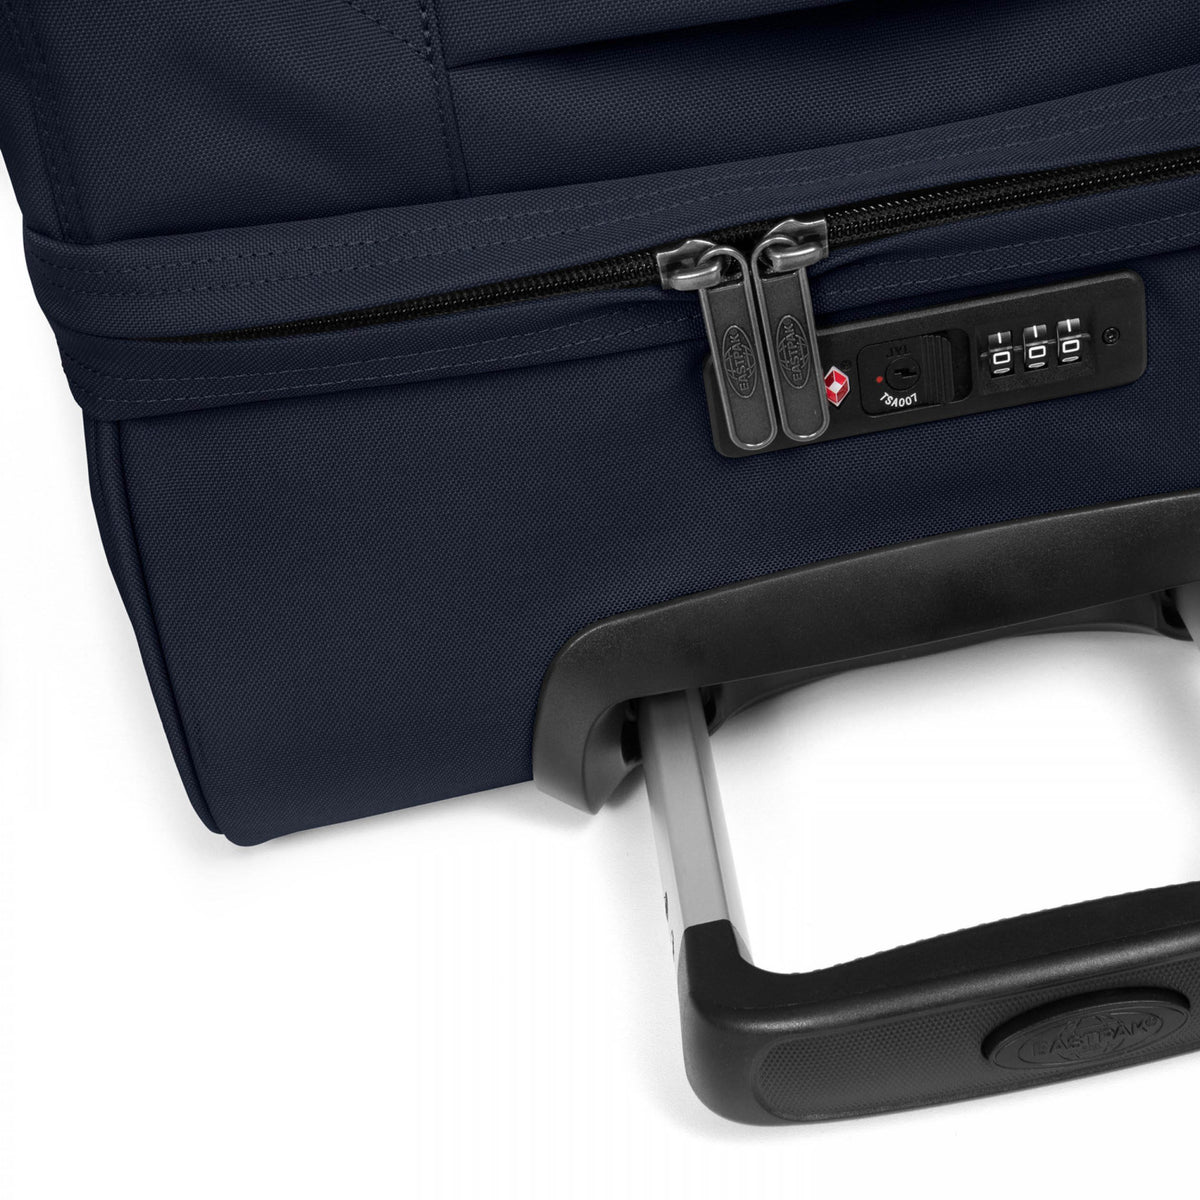 Eastpak Transit'R S Suitcase - Ultra Marine